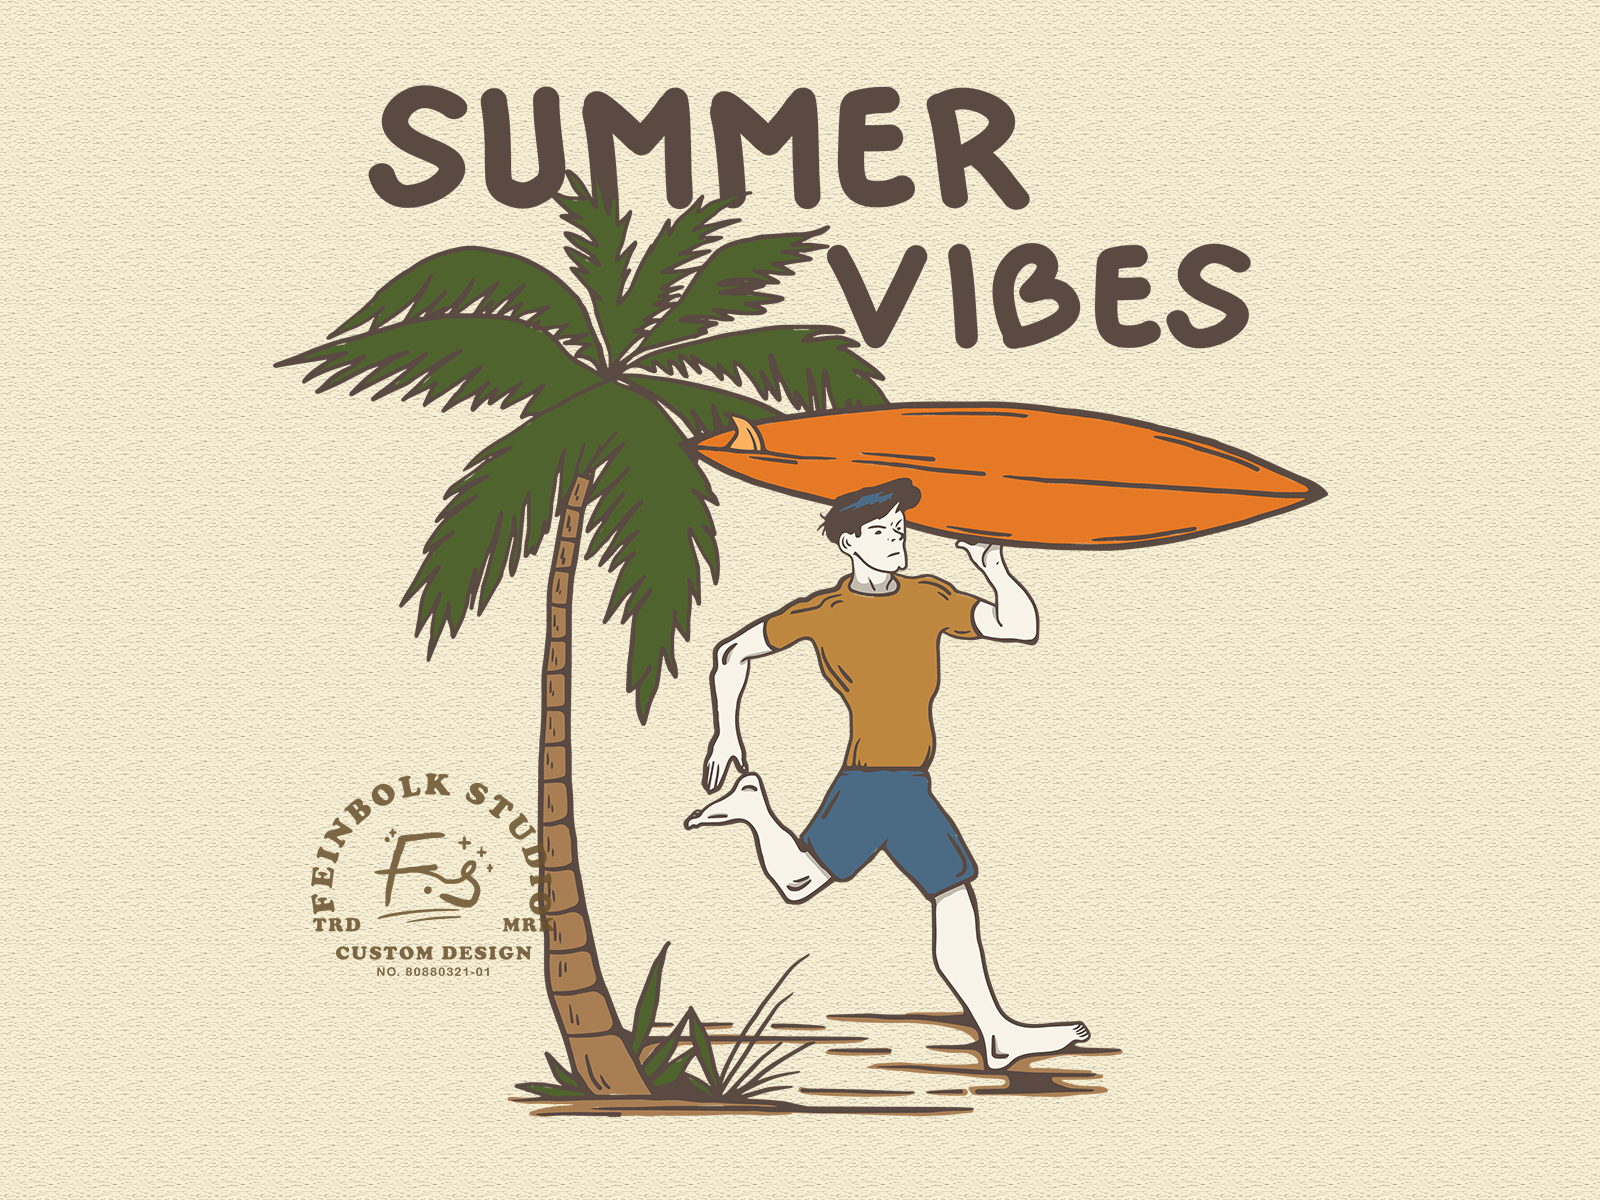 SUMMER VIBES by FeinbolkStudio on Dribbble